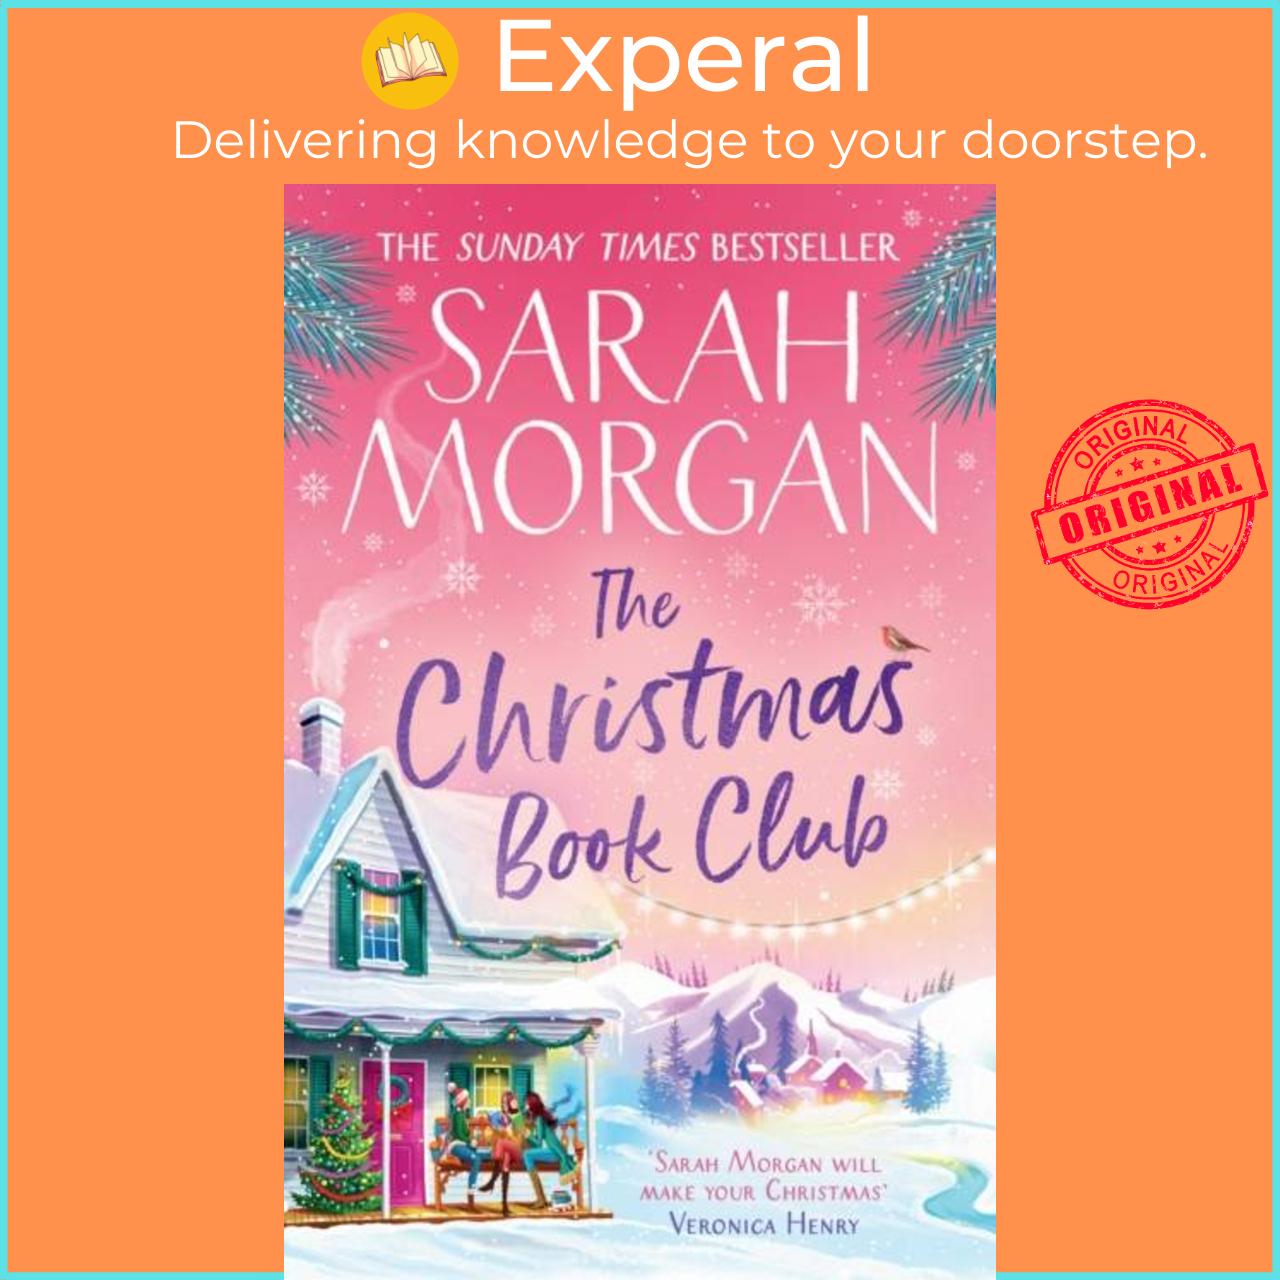 Sách - The Christmas Book Club by Sarah Morgan (UK edition, paperback)